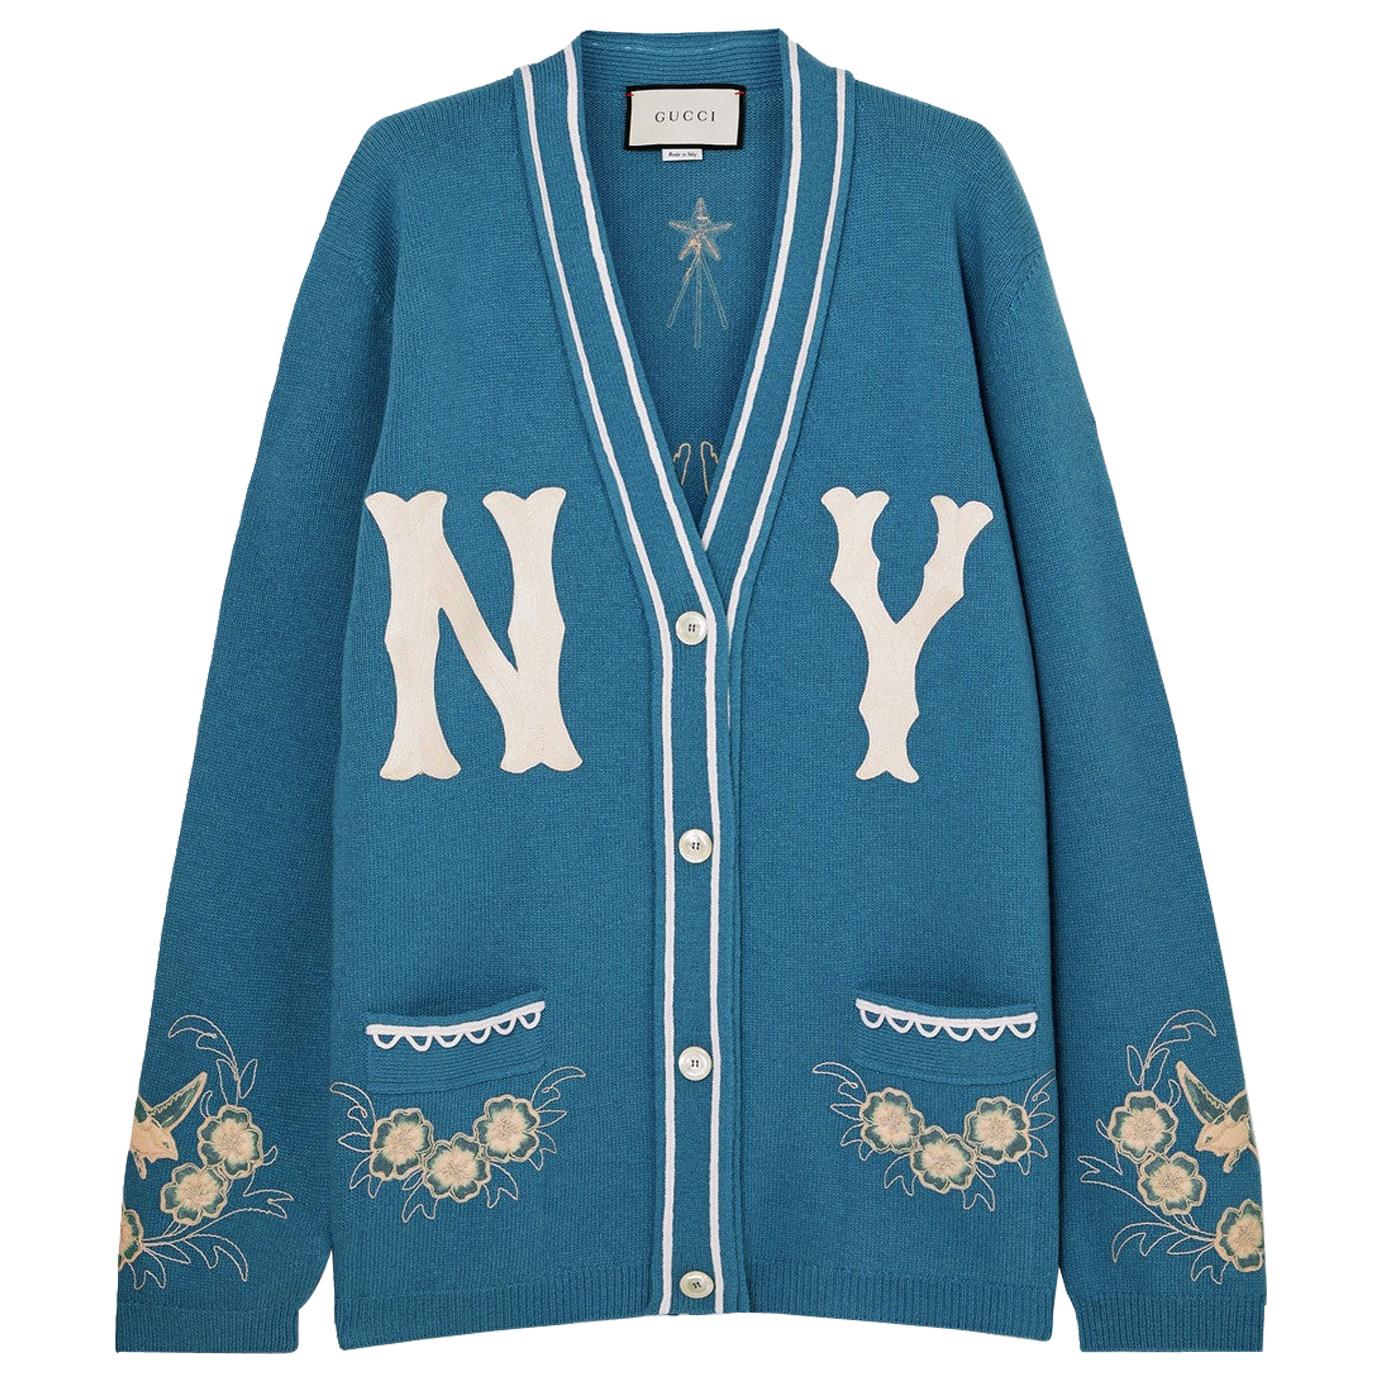 Gucci + New York Yankees Oversized Appliquéd Wool Cardigan